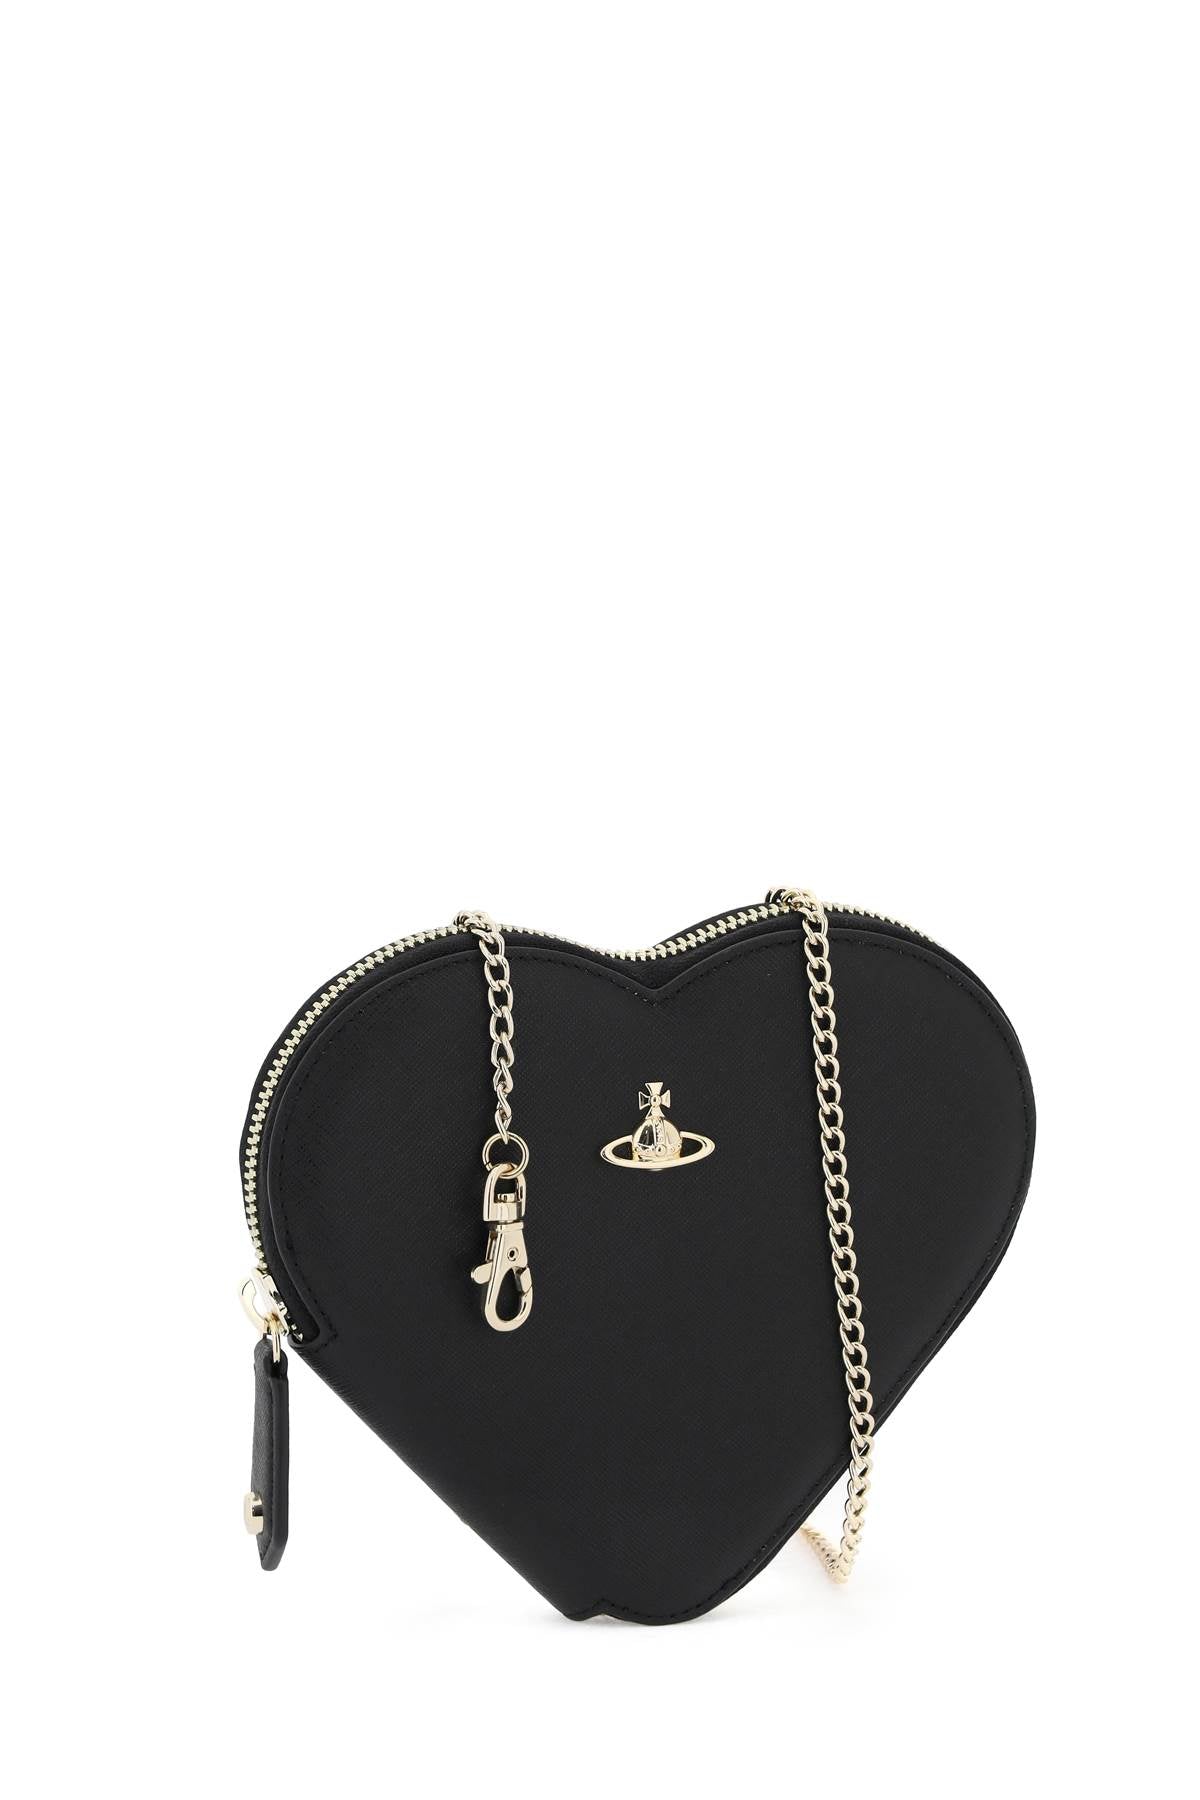 heart-shaped crossbody bag-2